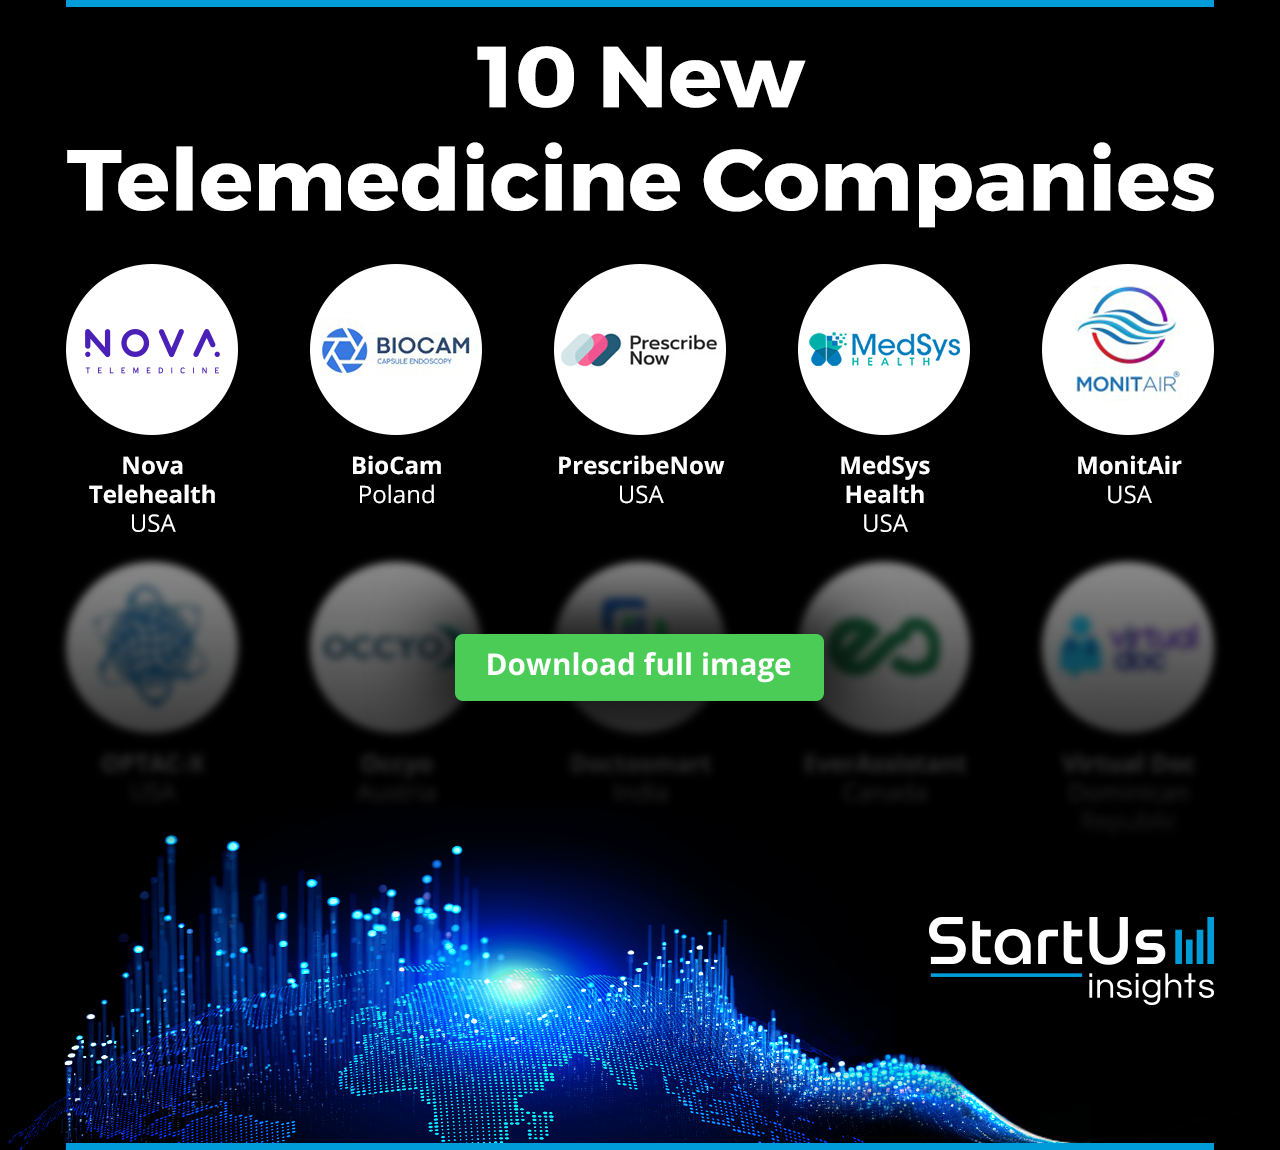 New-Telemedicine-Companies-Logos-Blurred-StartUs-Insights-noresize